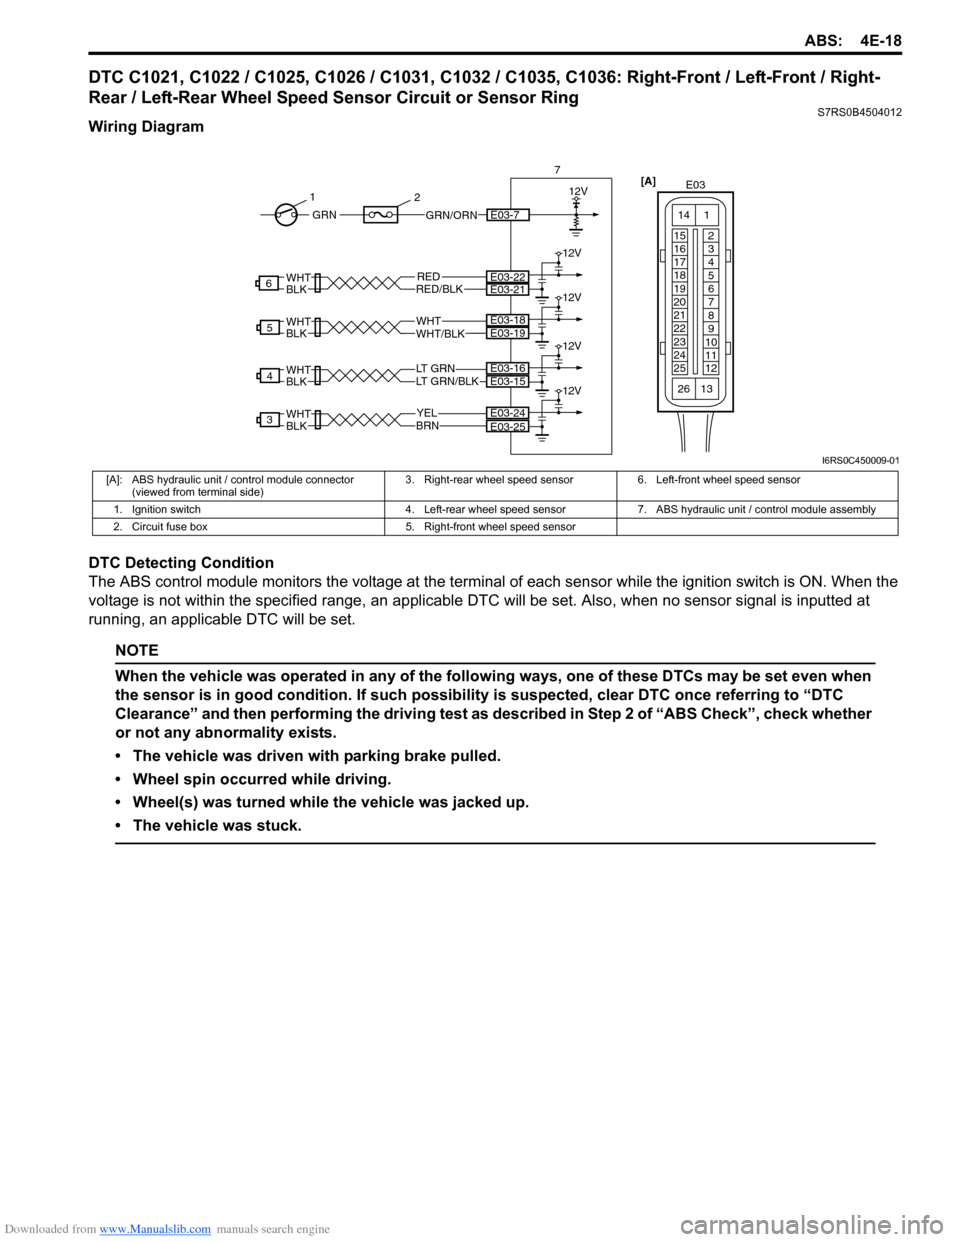 SUZUKI SWIFT 2005 2.G Service Service Manual Downloaded from www.Manualslib.com manuals search engine ABS: 4E-18
DTC C1021, C1022 / C1025, C1026 / C1031, C1032 / C1035, C1036: Right-Front / Left-Front / Right-
Rear / Left-Rear Wheel Speed Sensor